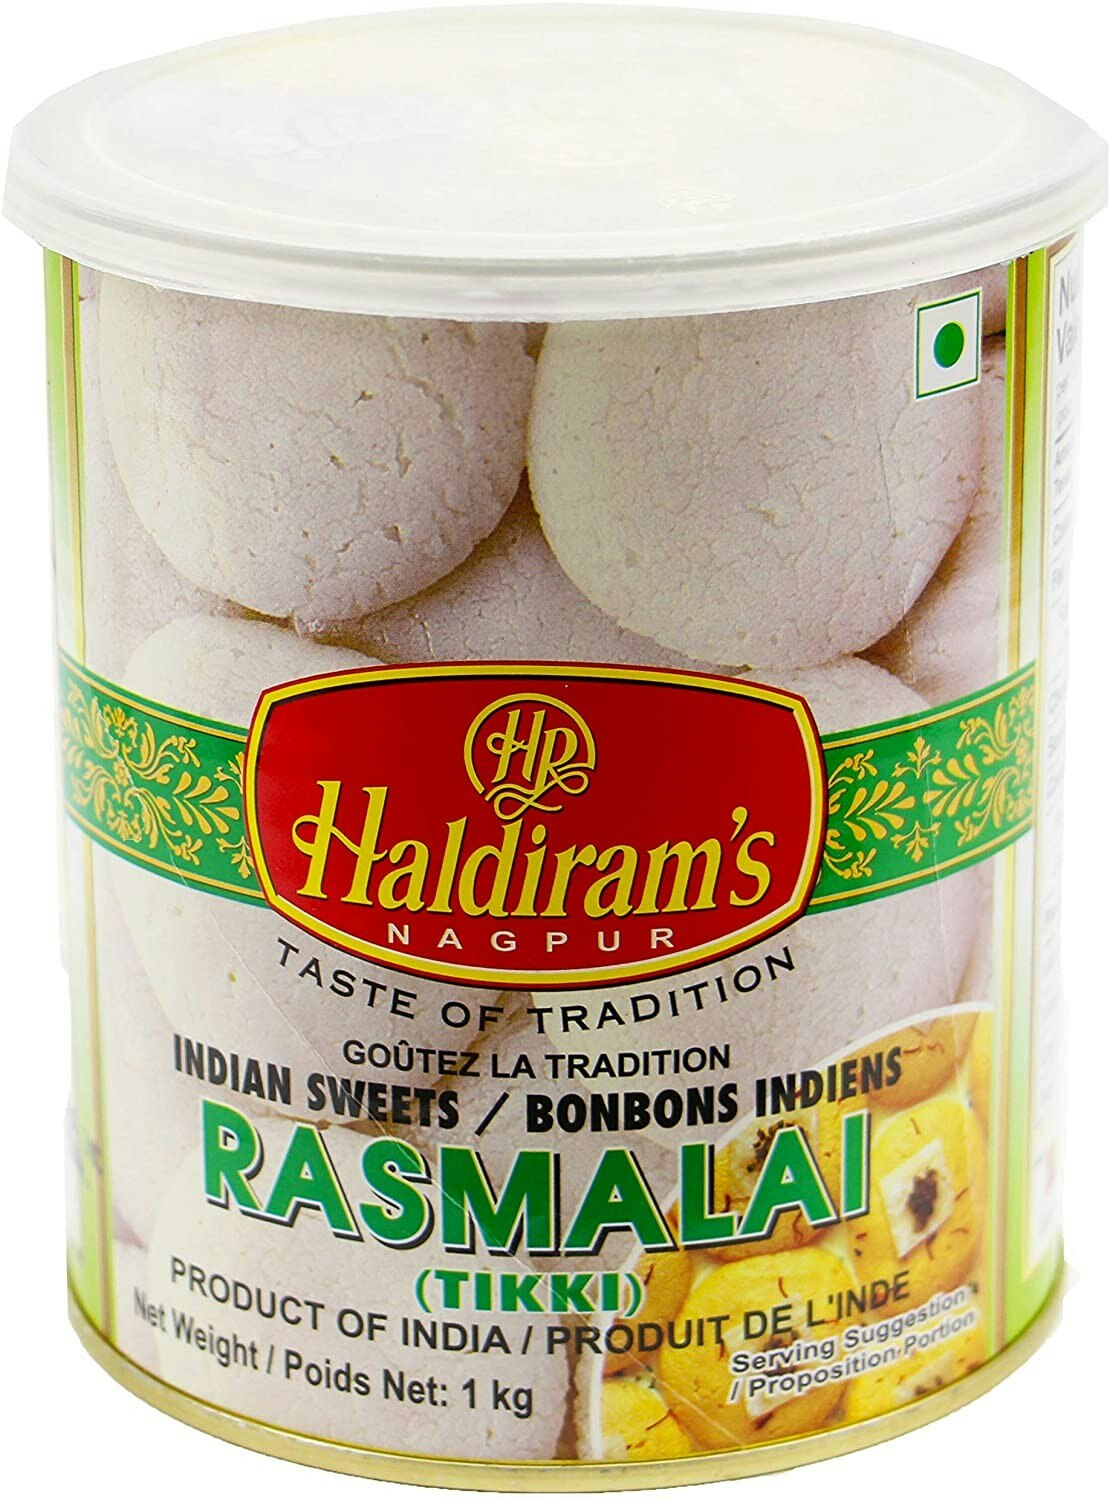 Rasmalai(Tikki) (Haldiram's) - 1kg